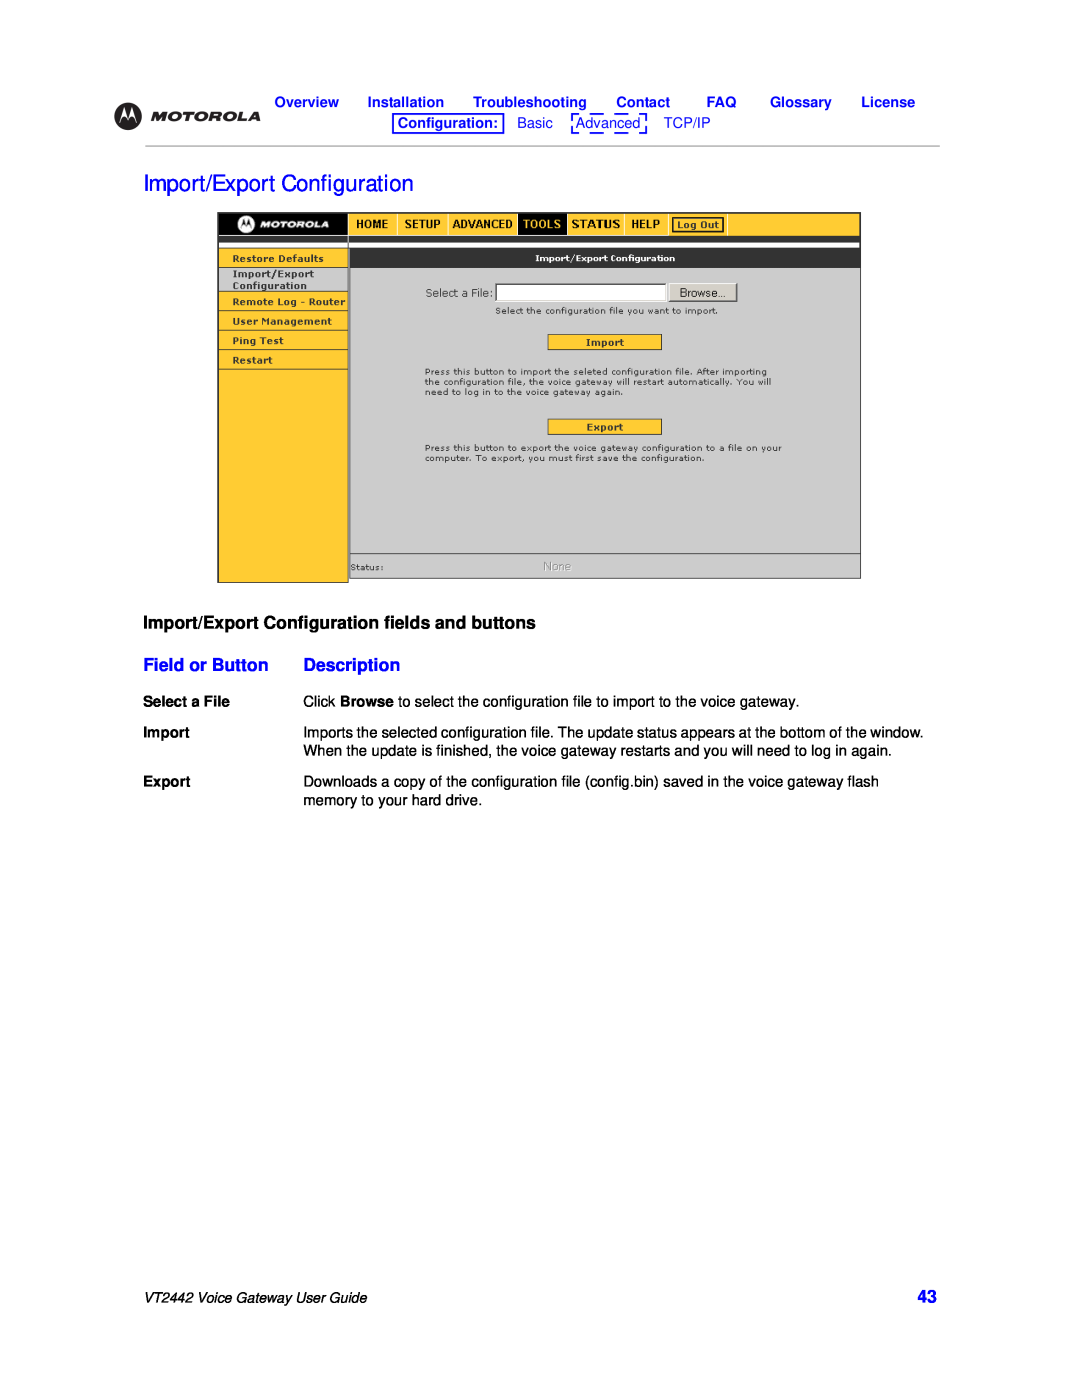 Motorola VT2442 manual Import/Export Configuration fields and buttons, Field or Button, Description 